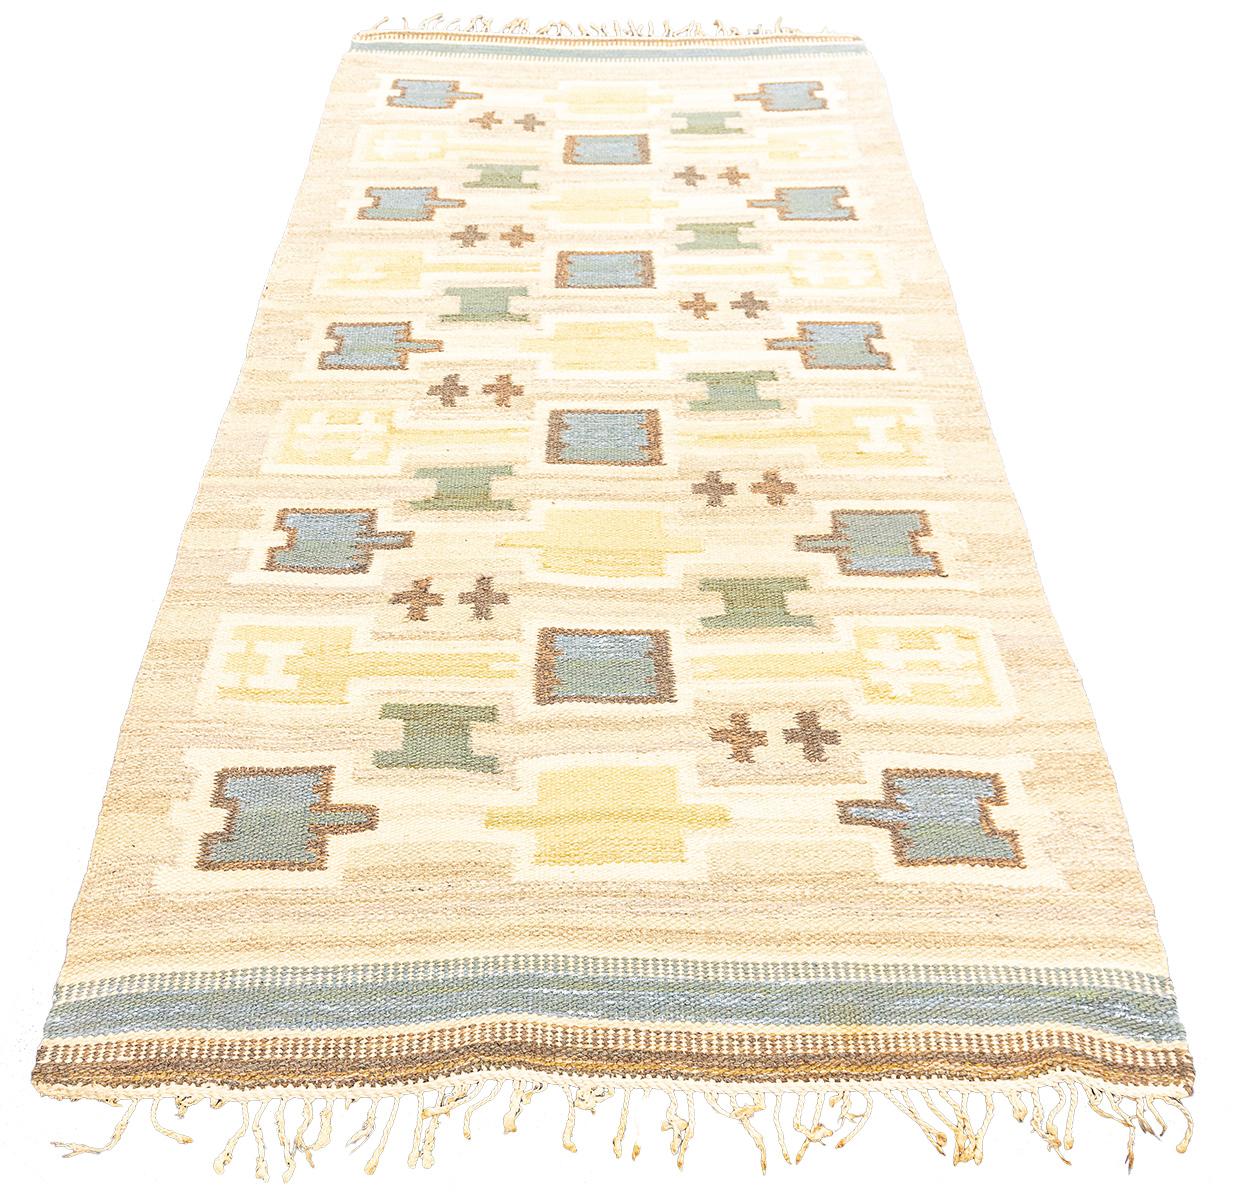 Hand-Crafted Scandinavian Carpet Rollakan Swedish Cross Motif Design